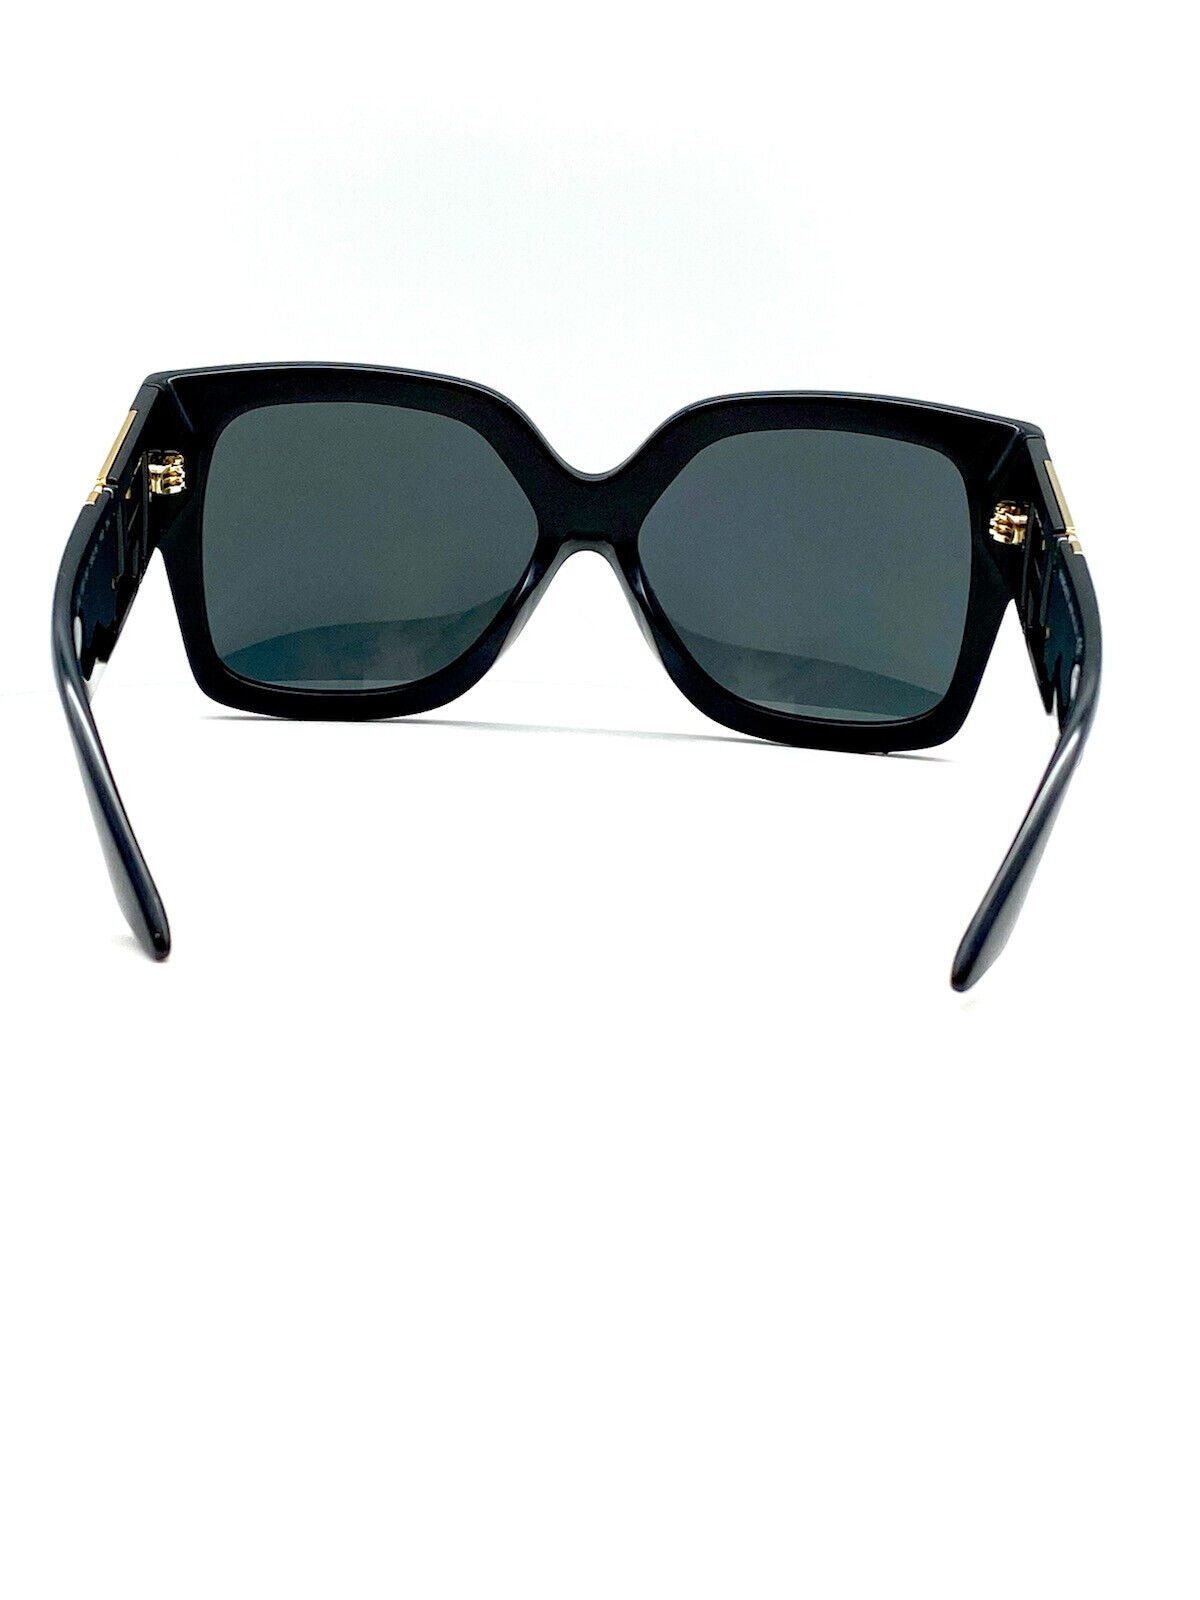 Versace VE4402 GB1/87 Black/Dark Gray Full-Rim Rectangle Women's Sunglasses